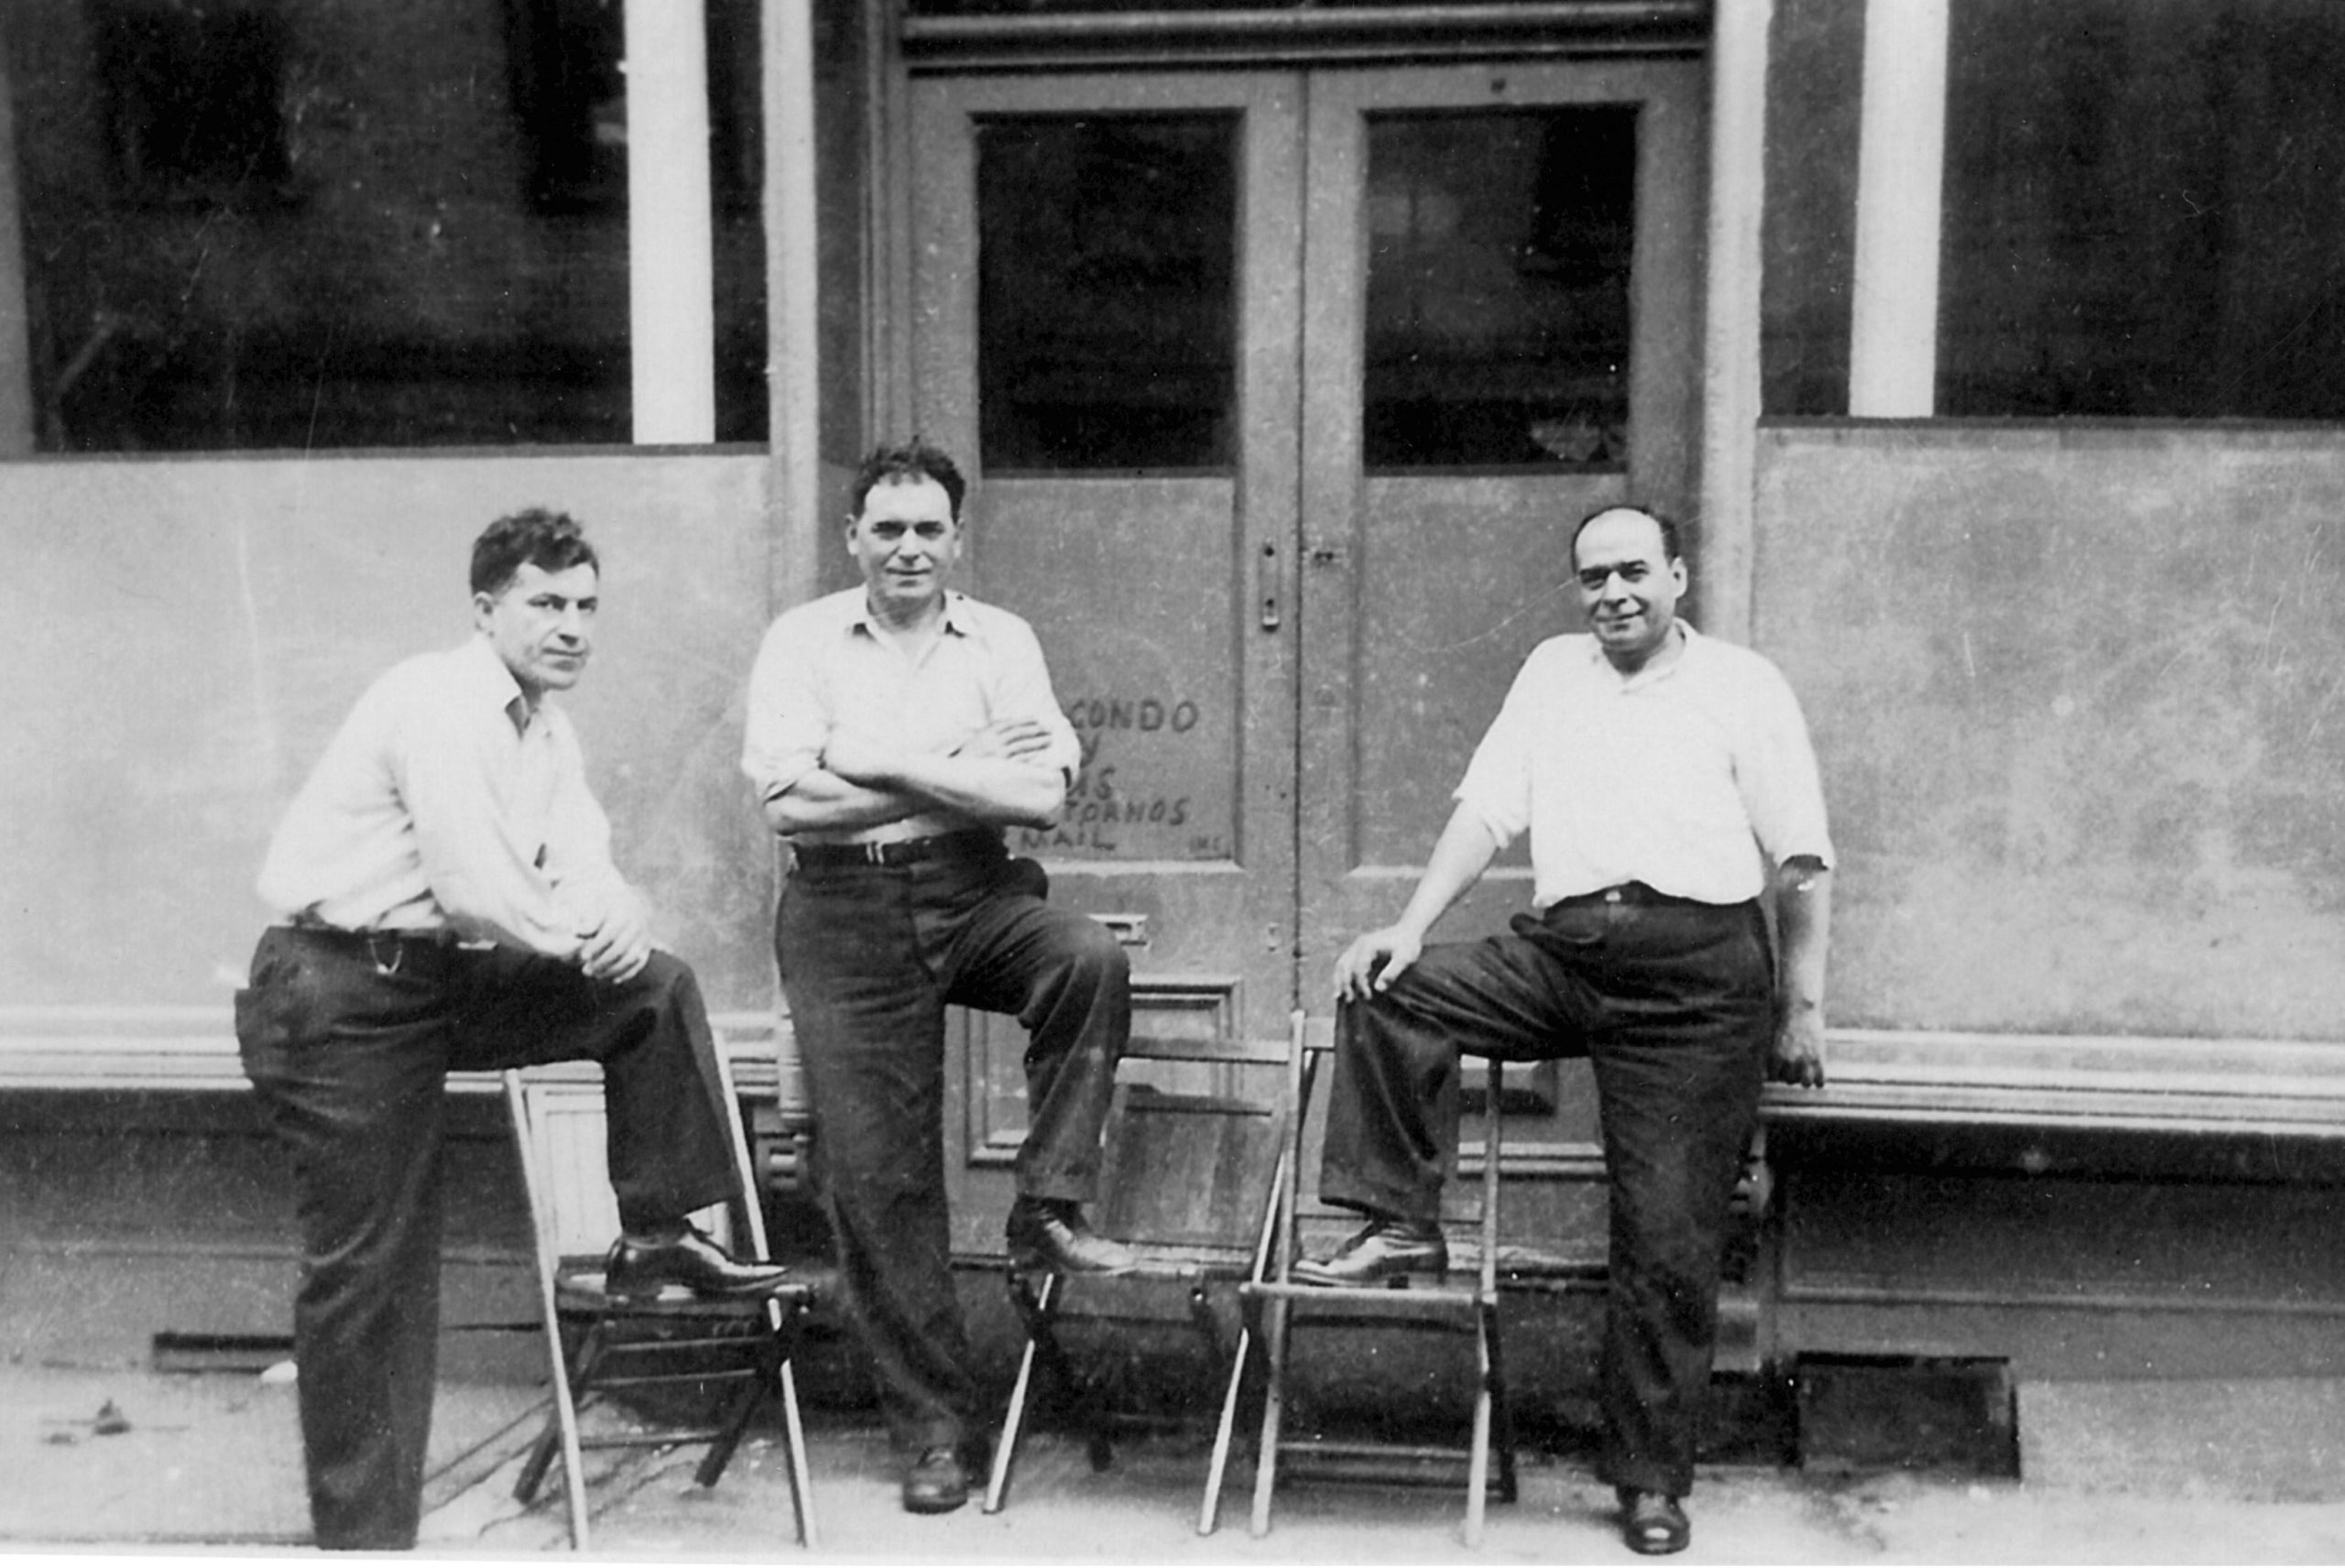 Founders of the society Bergondo y sus contornos in the 1920s (Arquivo Municipal de Bergondo, photo provided by Francisco Mosquera Muíño)